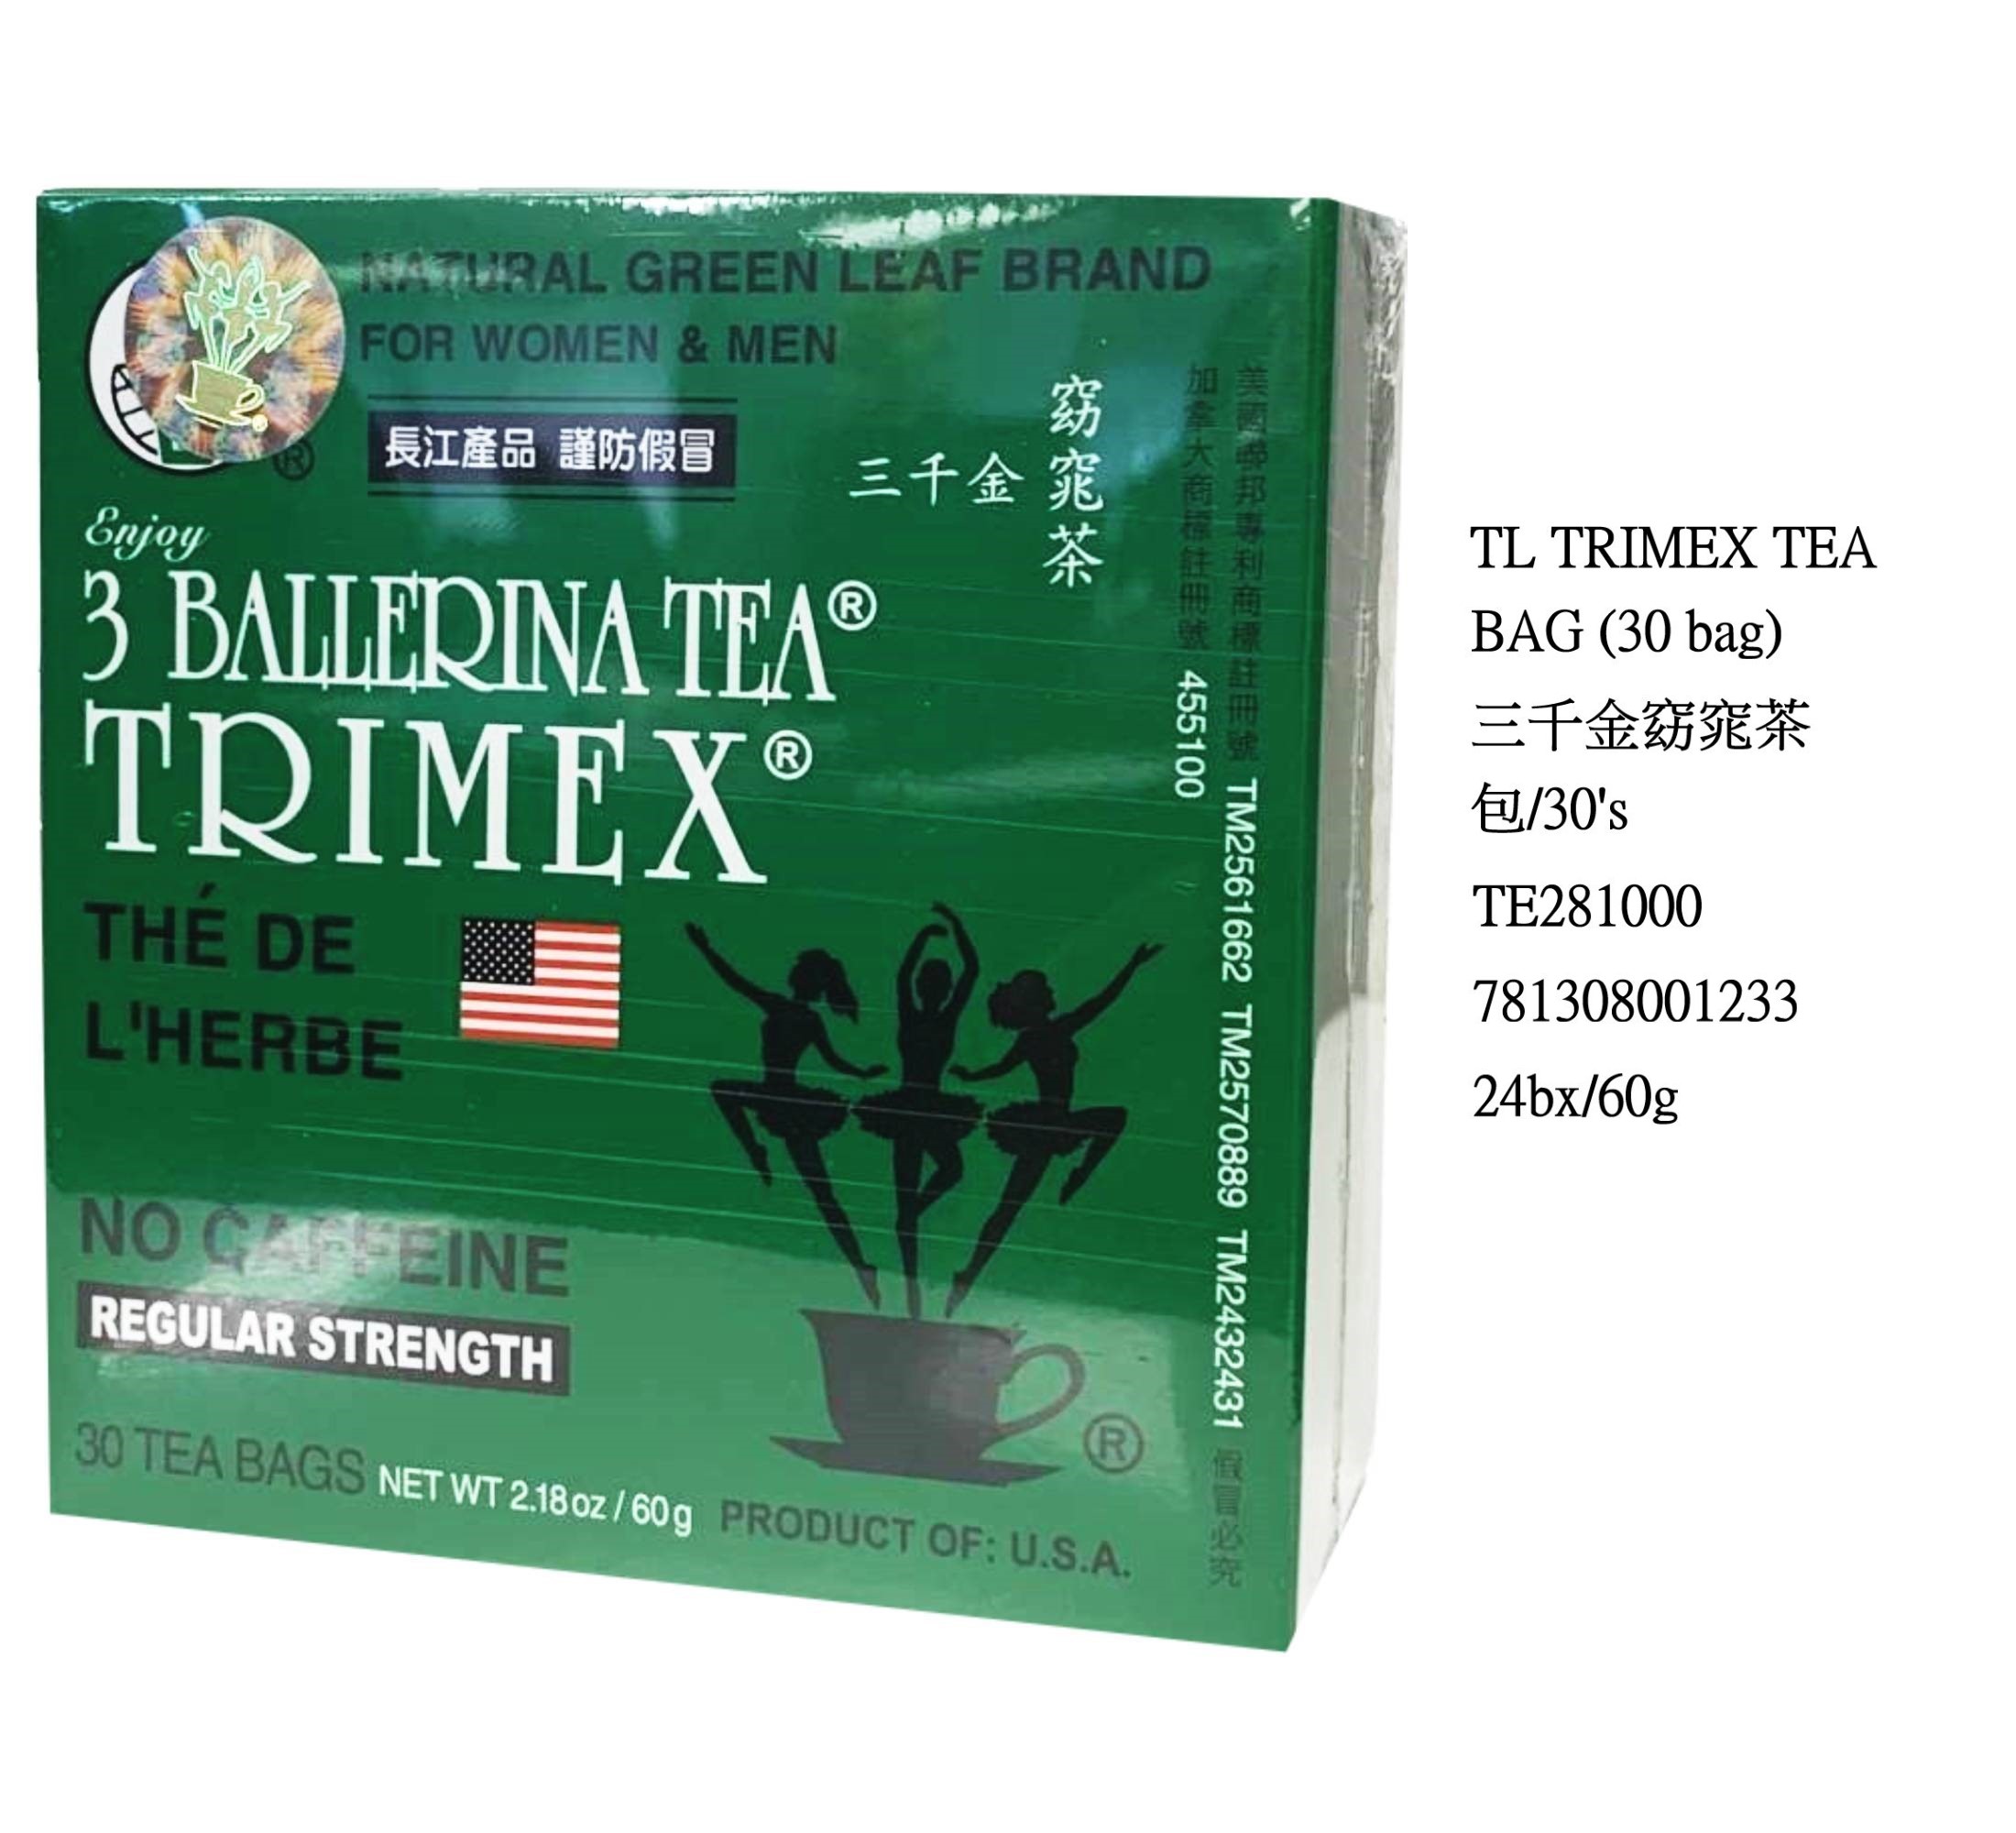 TL TRIMEX TEA BAG (30 BAGS) TE281000